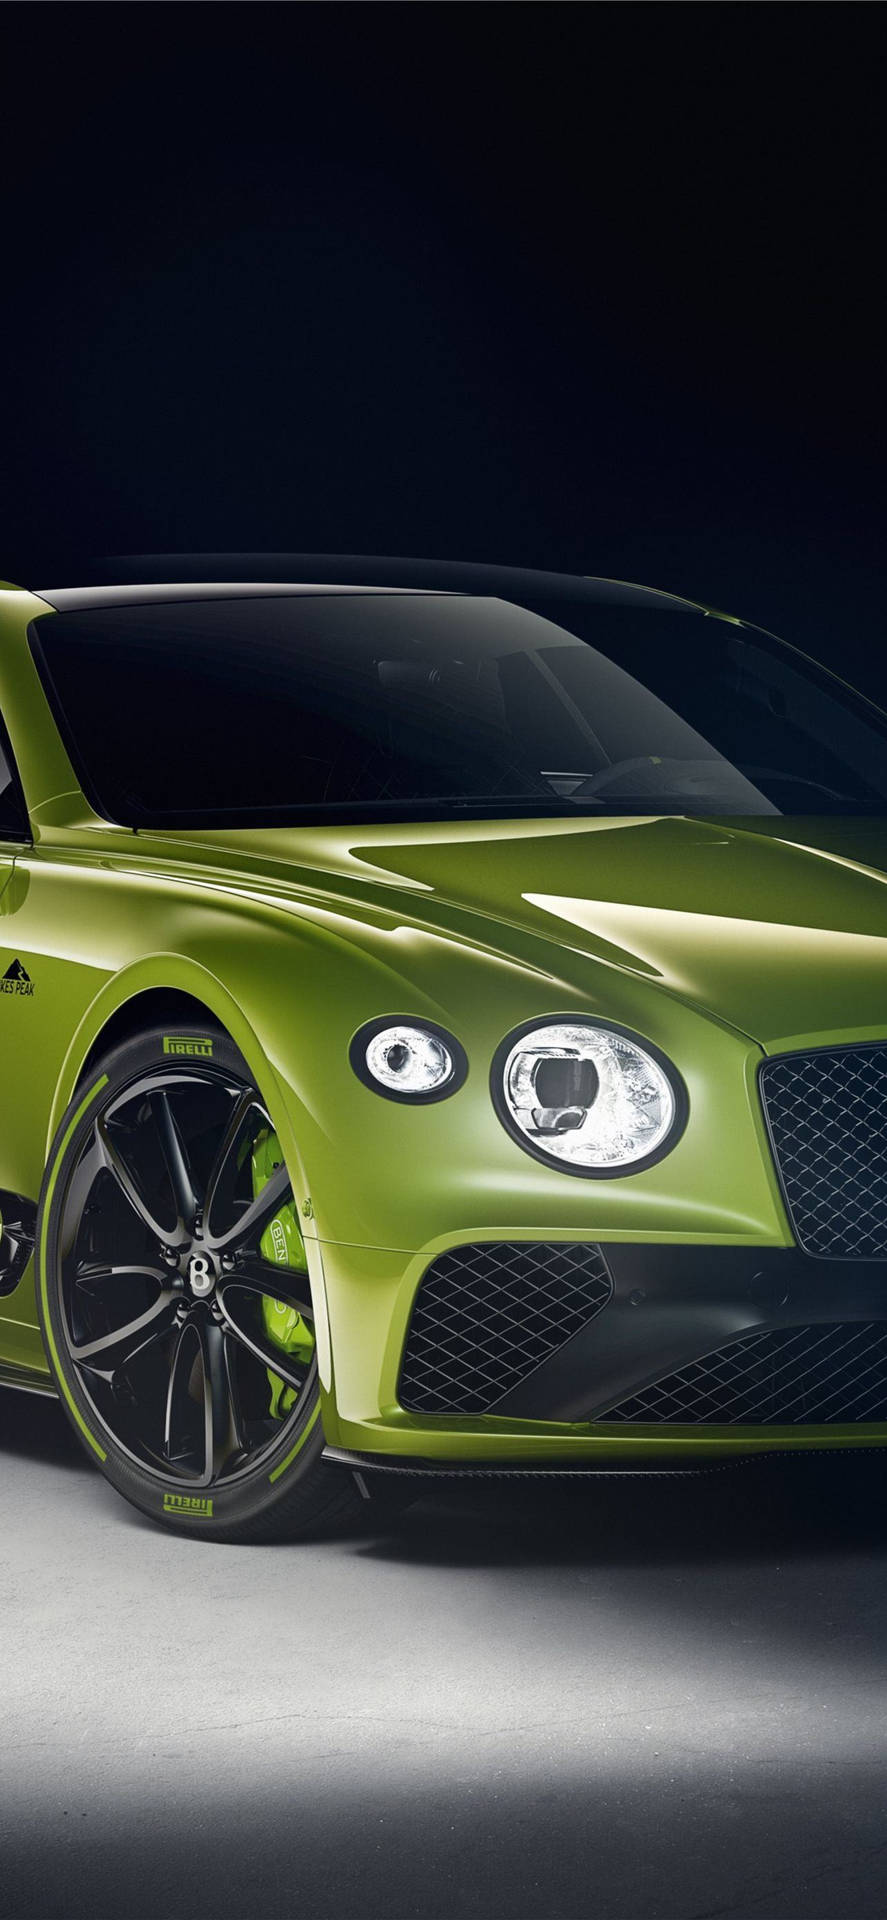 Yellow-green Bentley Ipchone